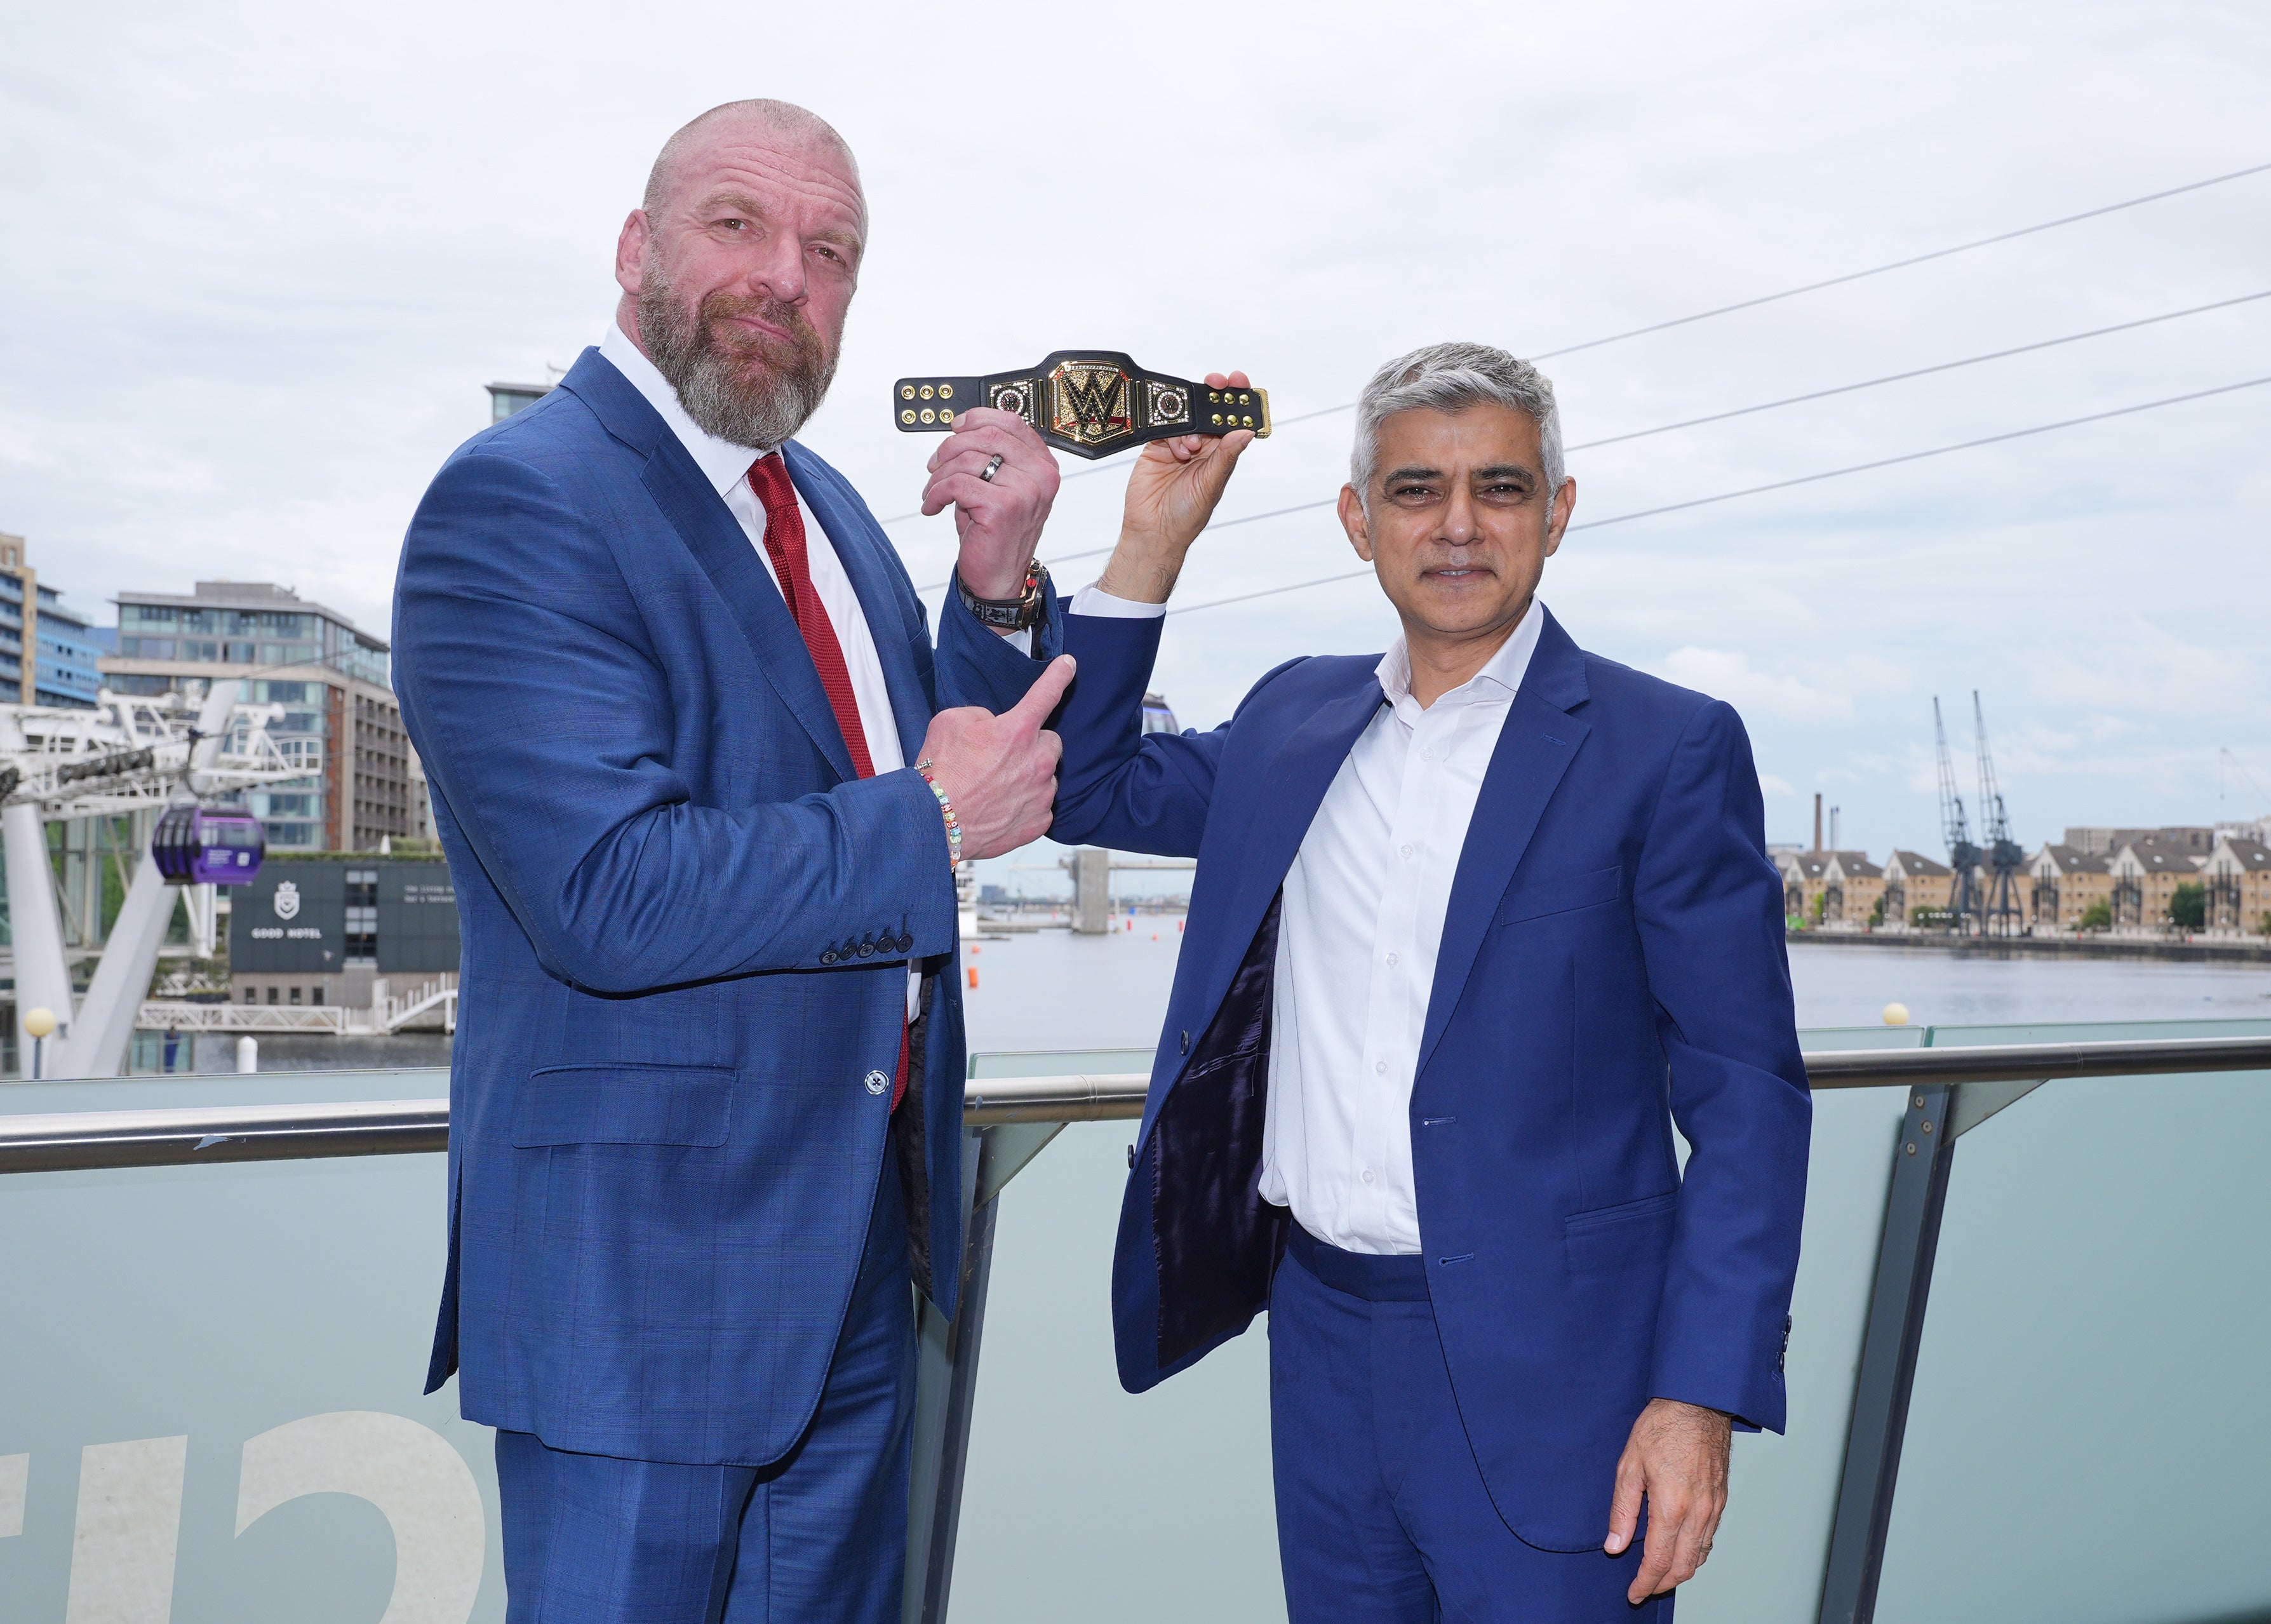 Mayor of London Sadiq Khan, right, holds aloft a gifted mini replica WWE Championship belt, with Paul ‘Triple H’ Levesque